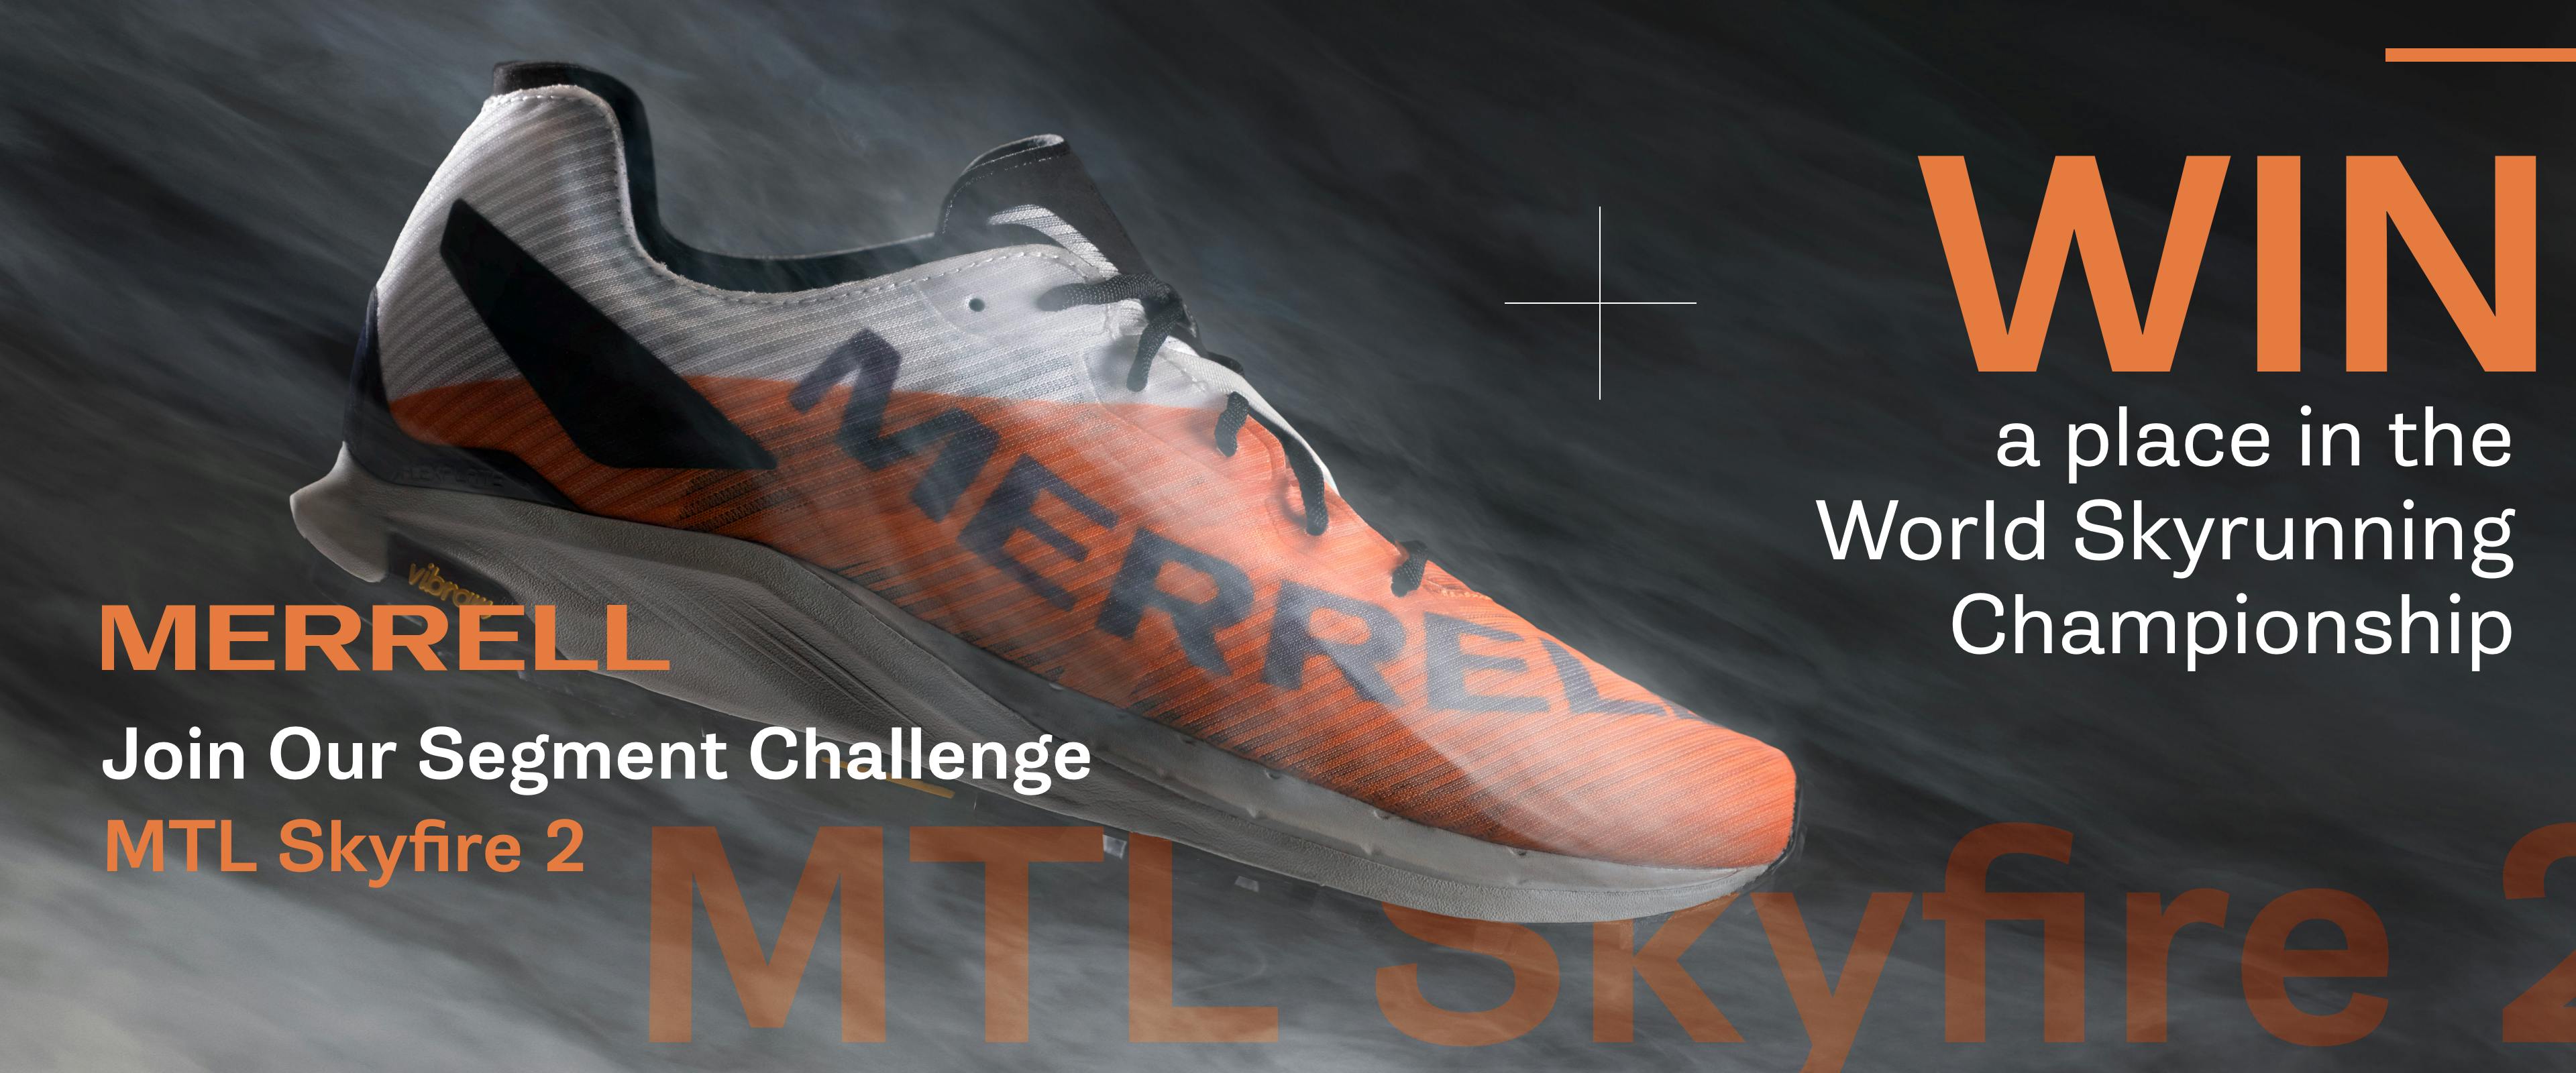 merrell-skyfire-2-strava-challenge